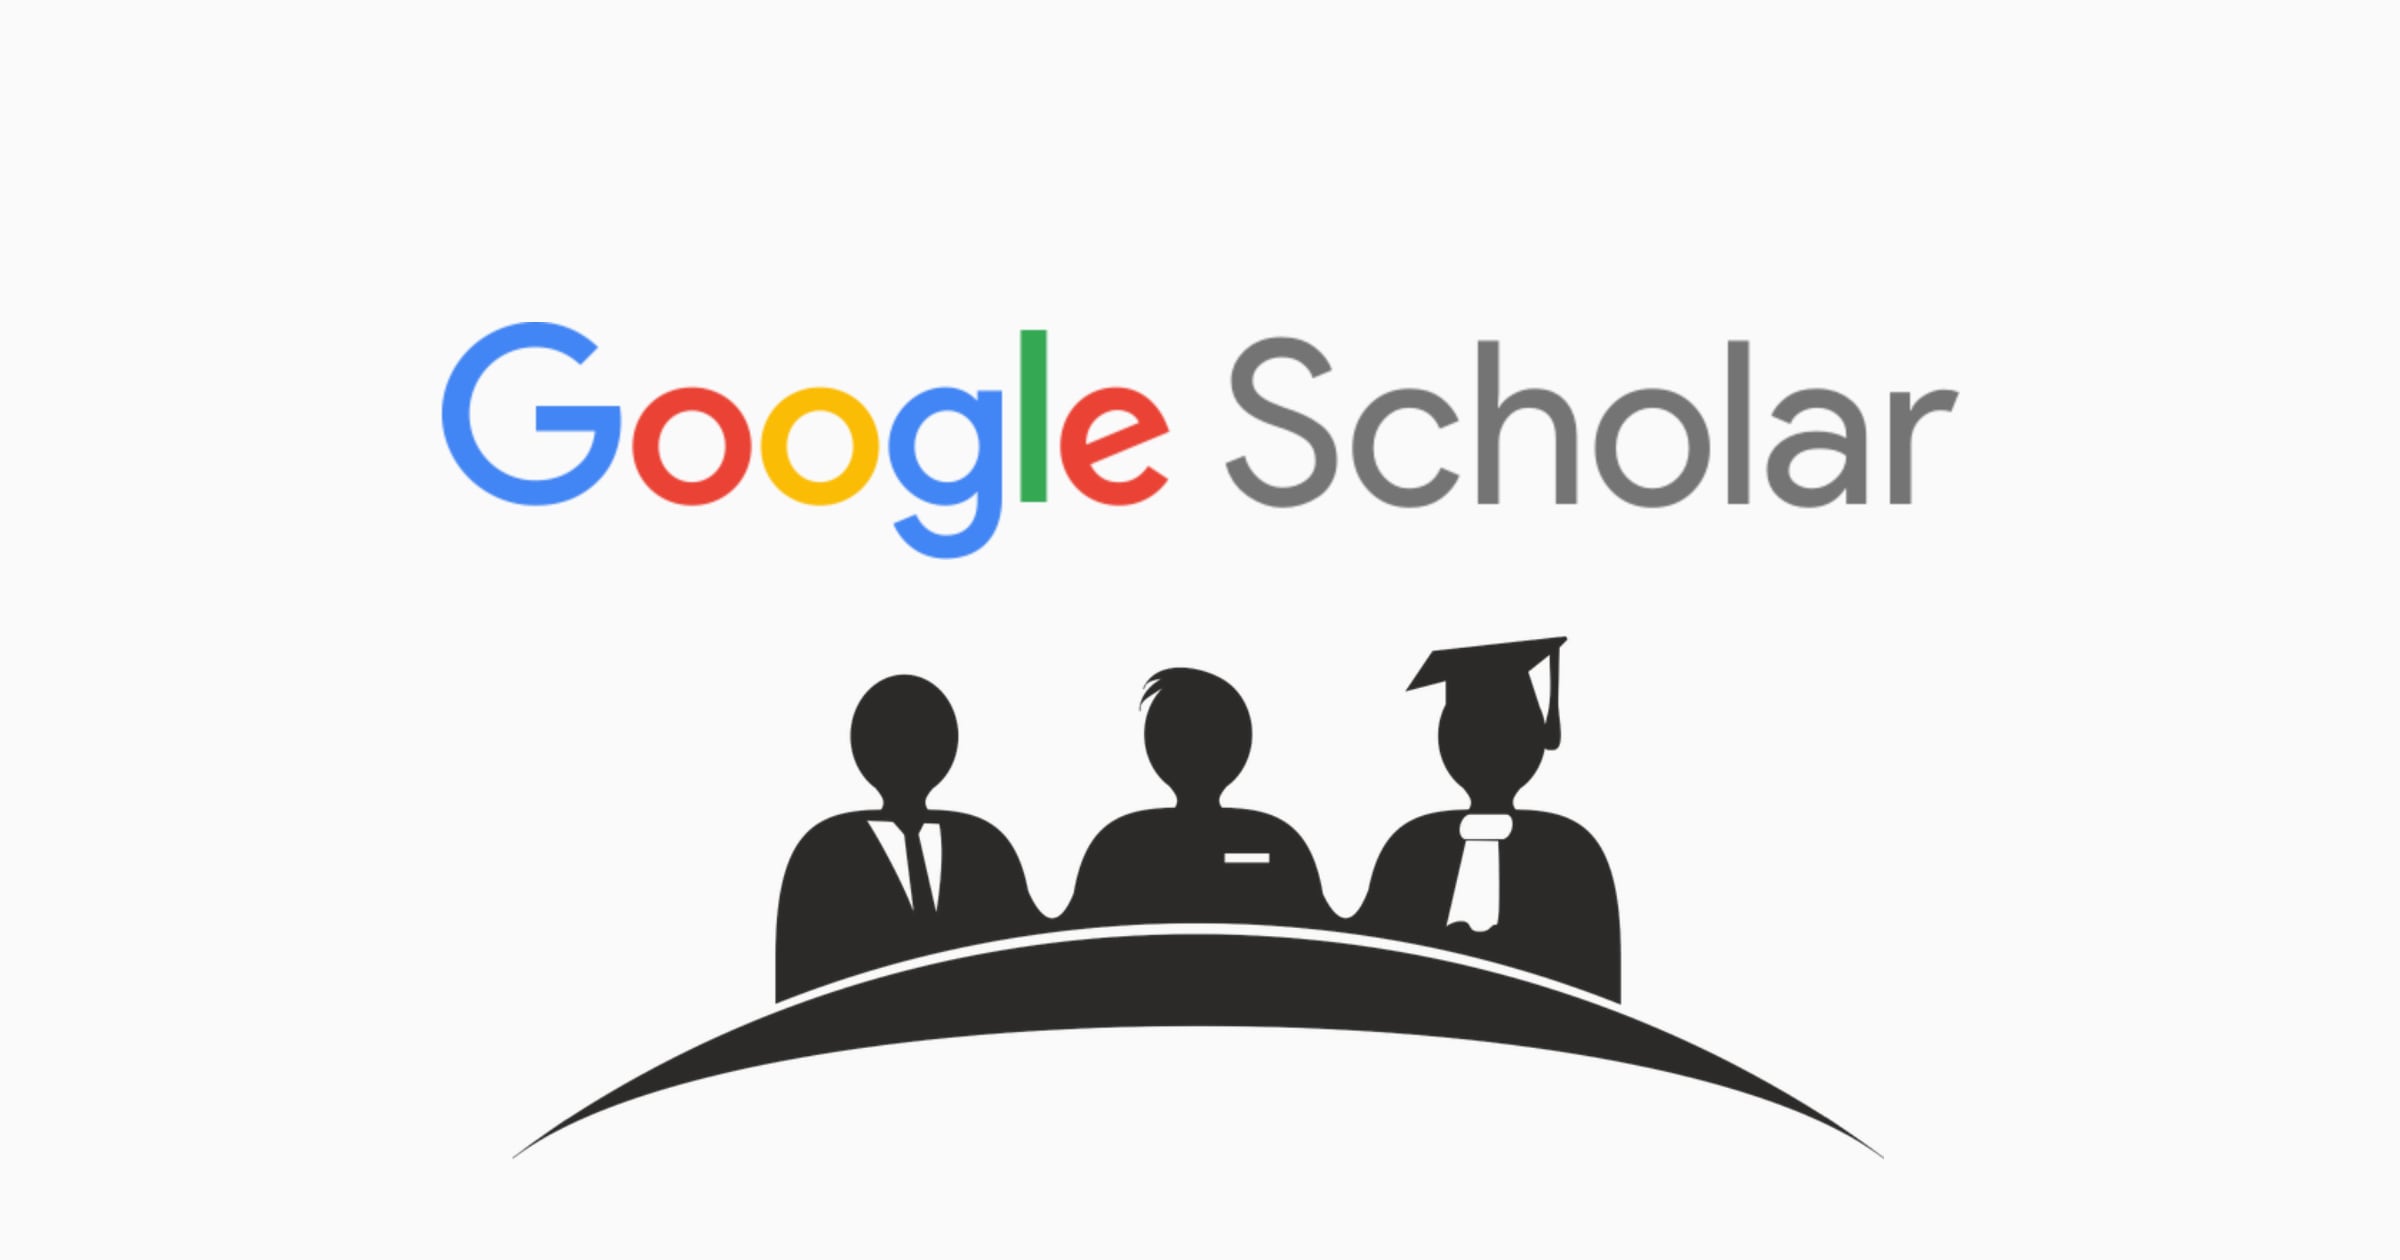 Google Scholar Index